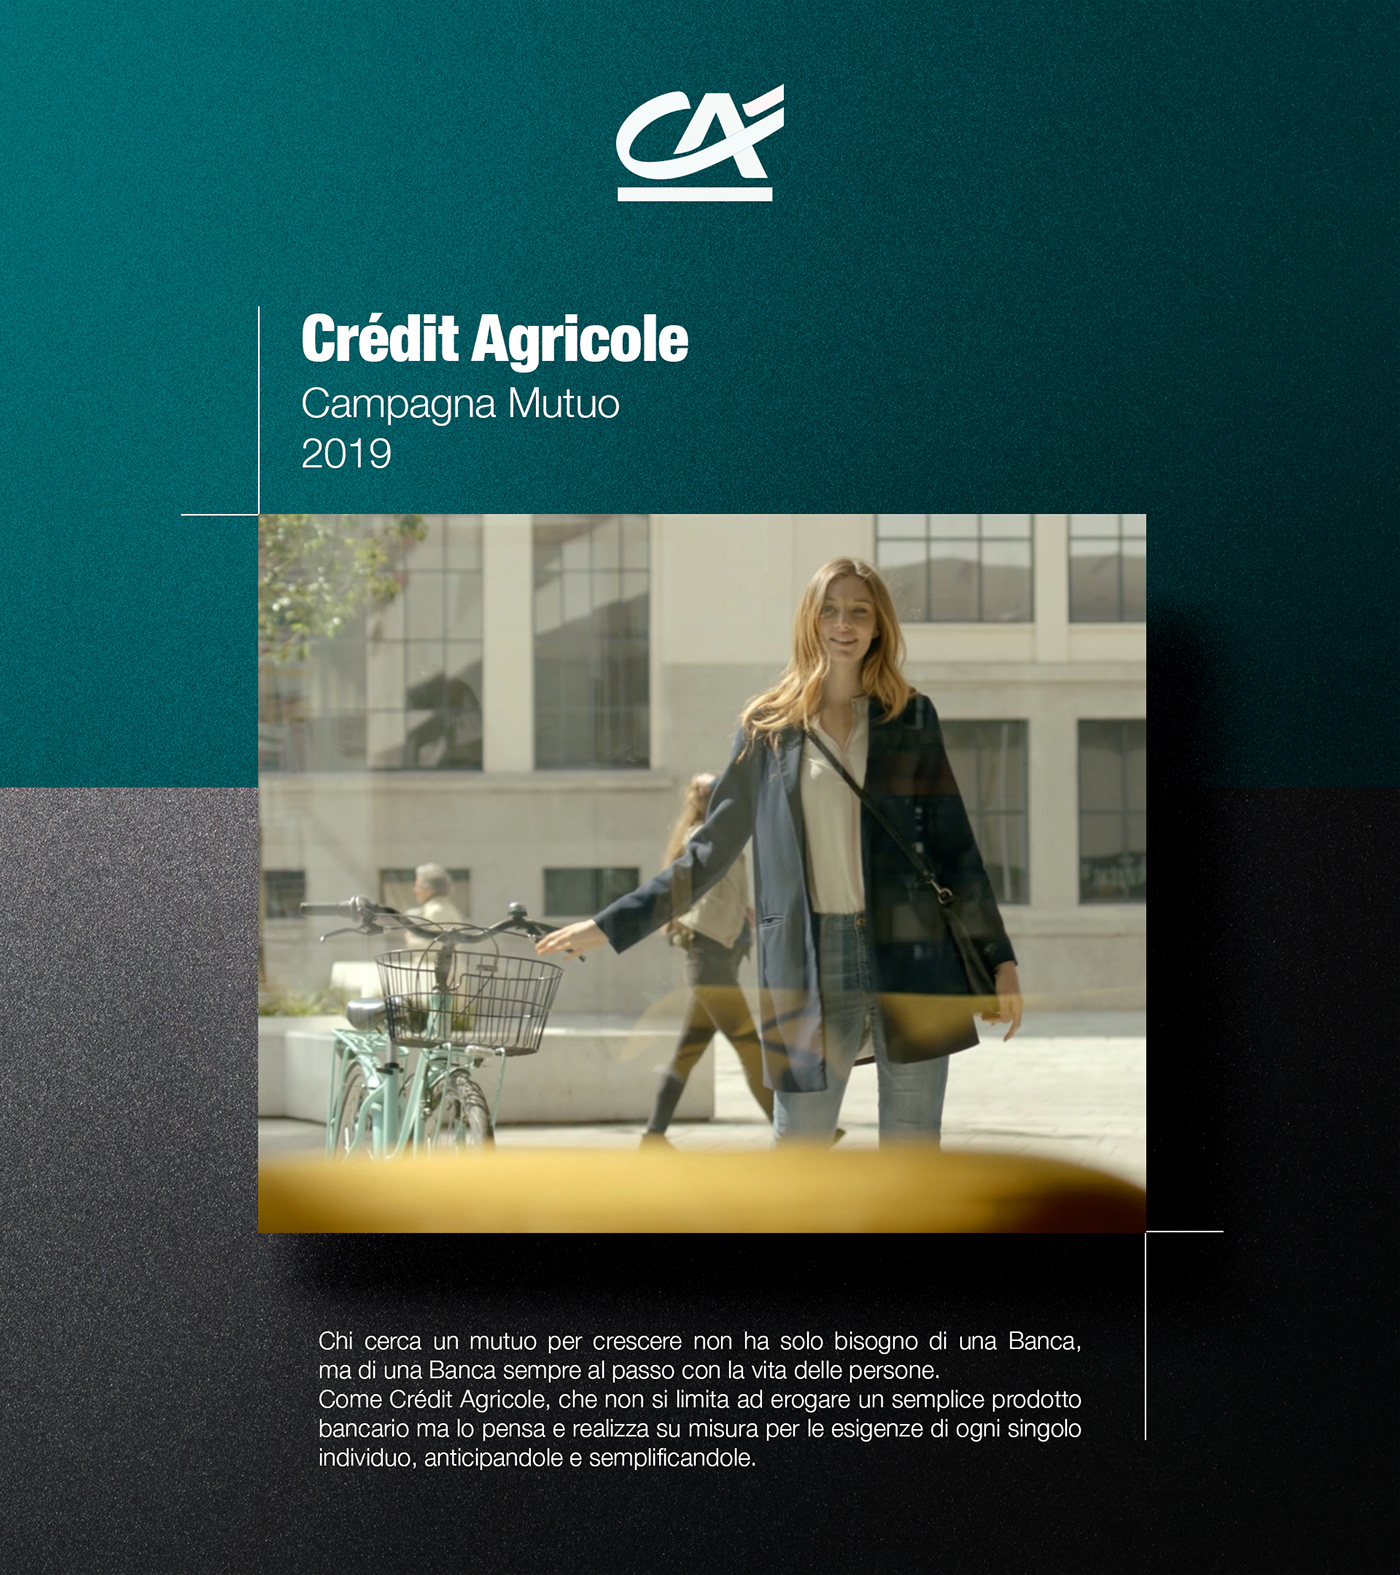 ADV Advertising  Advertising Campaign banca Bank Credit Agricole mutuo set shooting